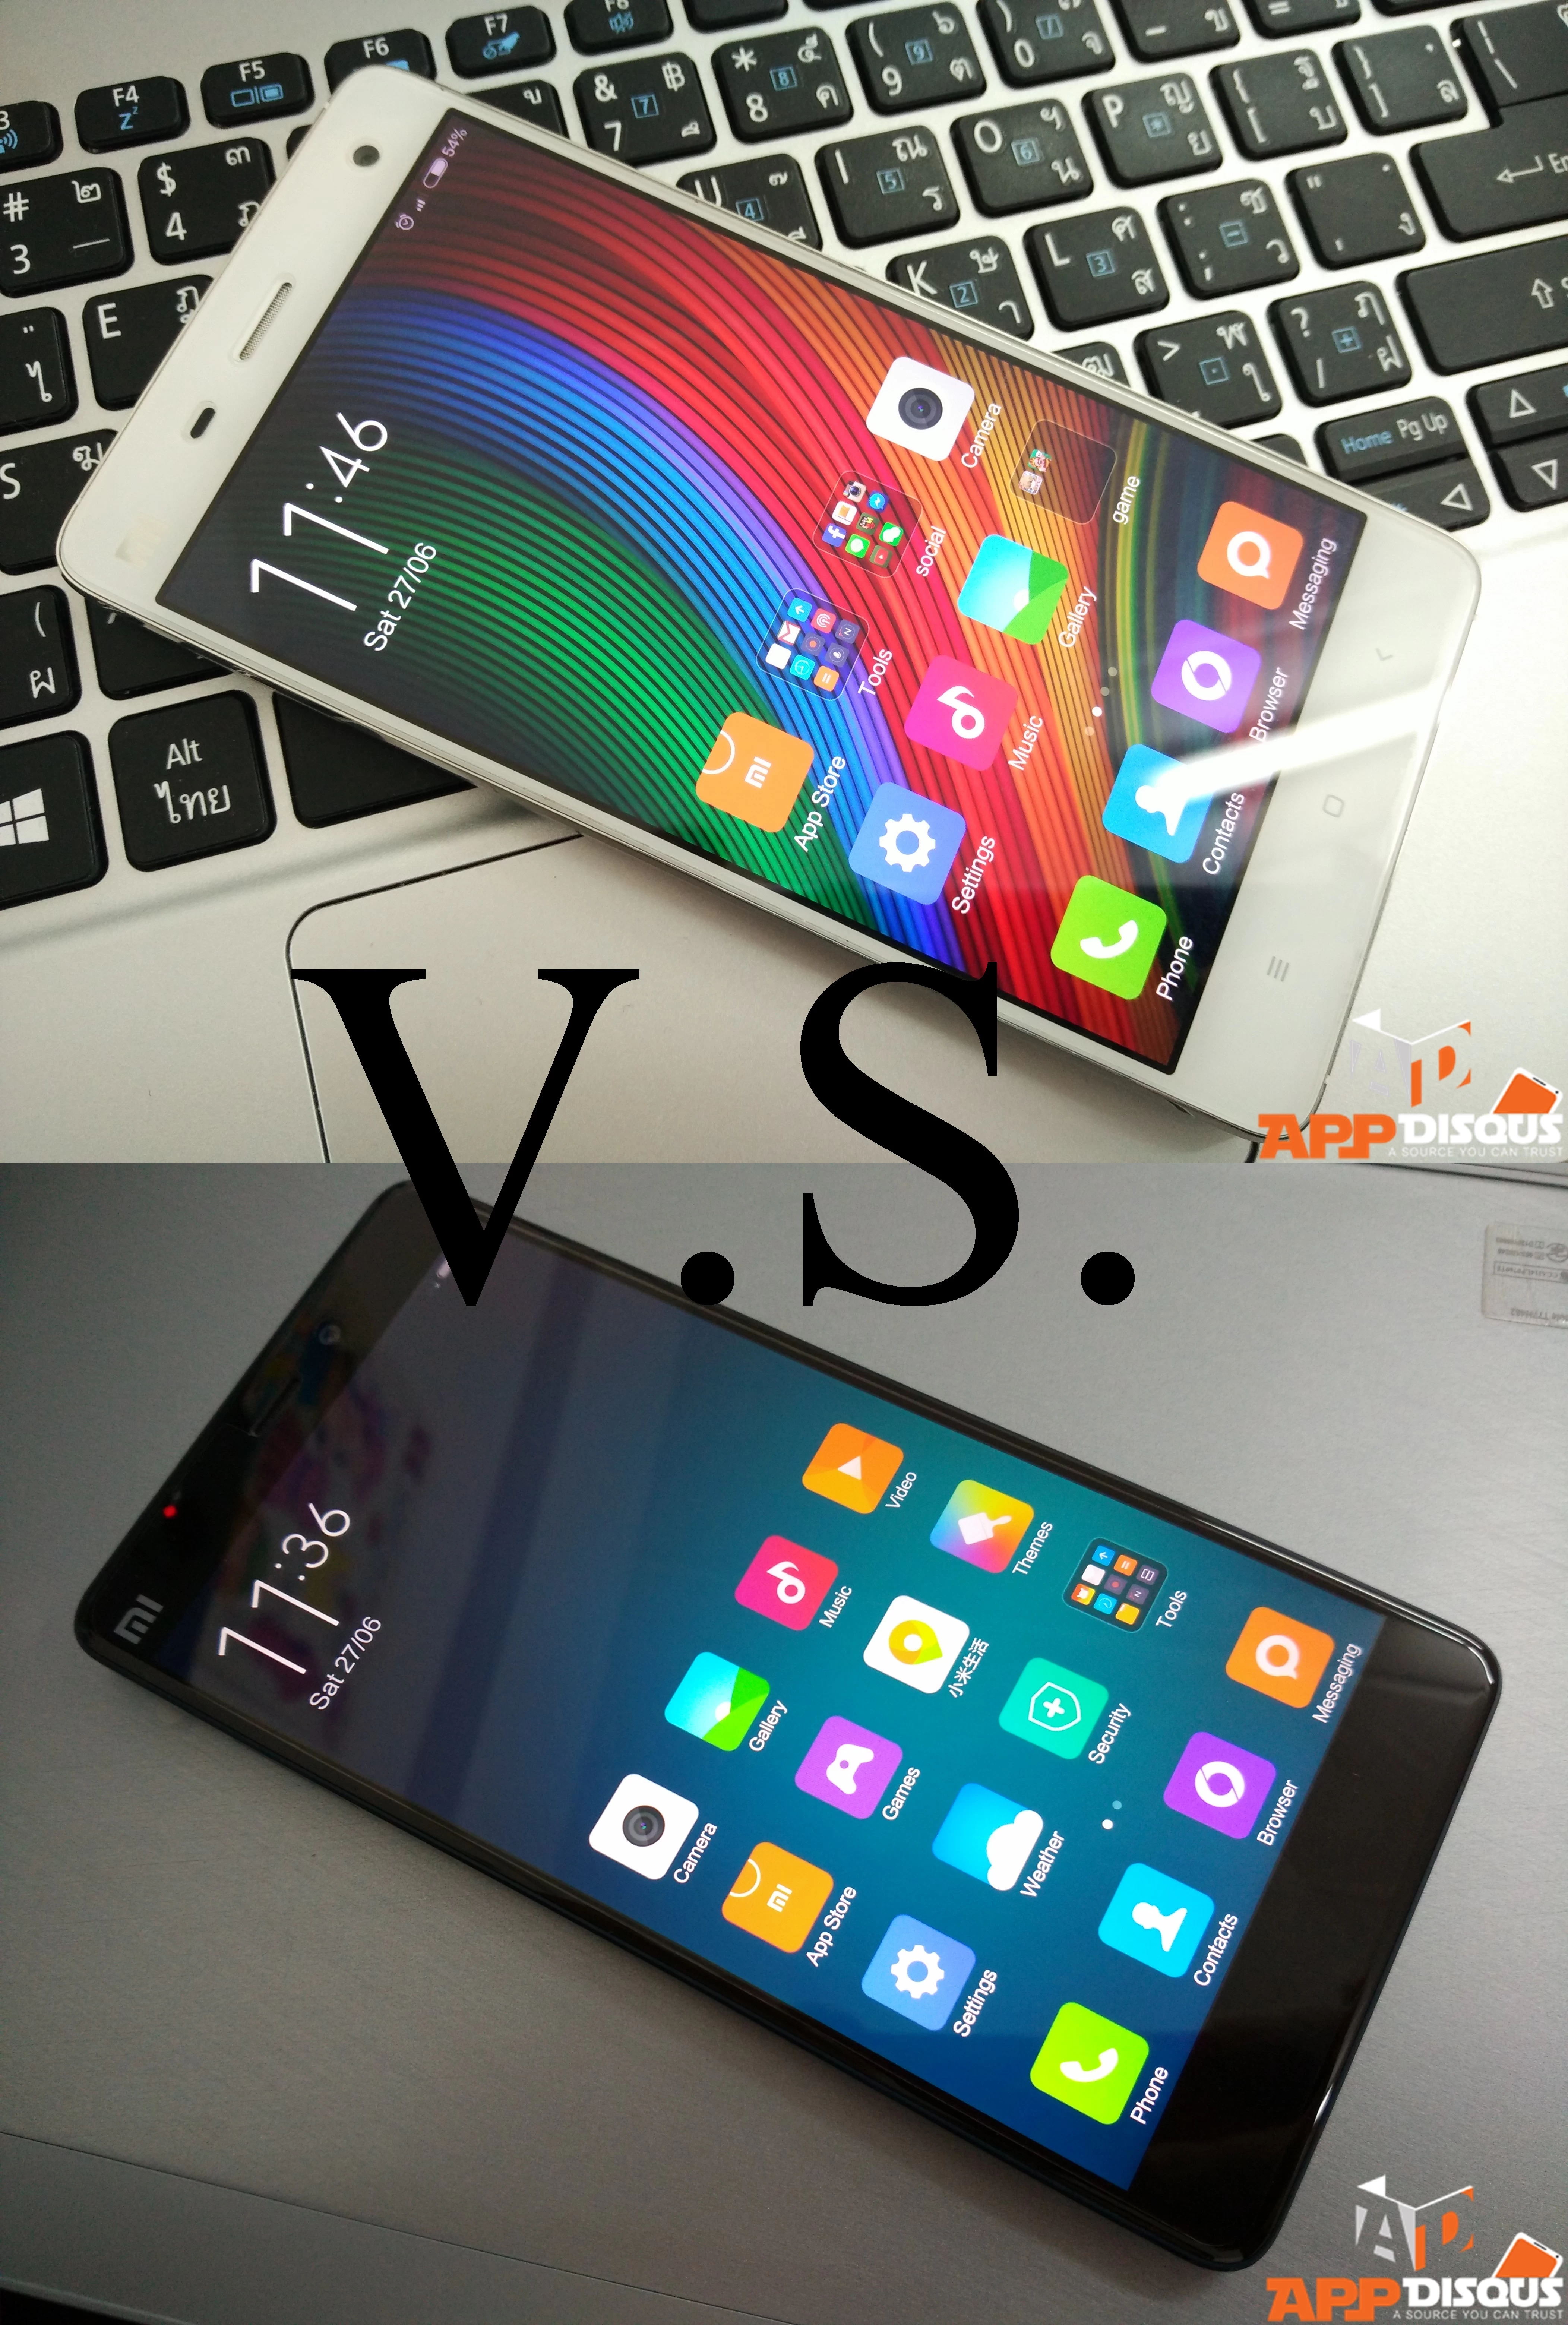 cats | Xiaomi MI4 | [เปรียบเทียบภาพถ่าย] ศึกสุดยอดกล้องแห่งแดนมังกร Xiaomi MI4 กับ Xiaomi MI Note ใช่ไม่ใช่ประชันกันที่ความชัด